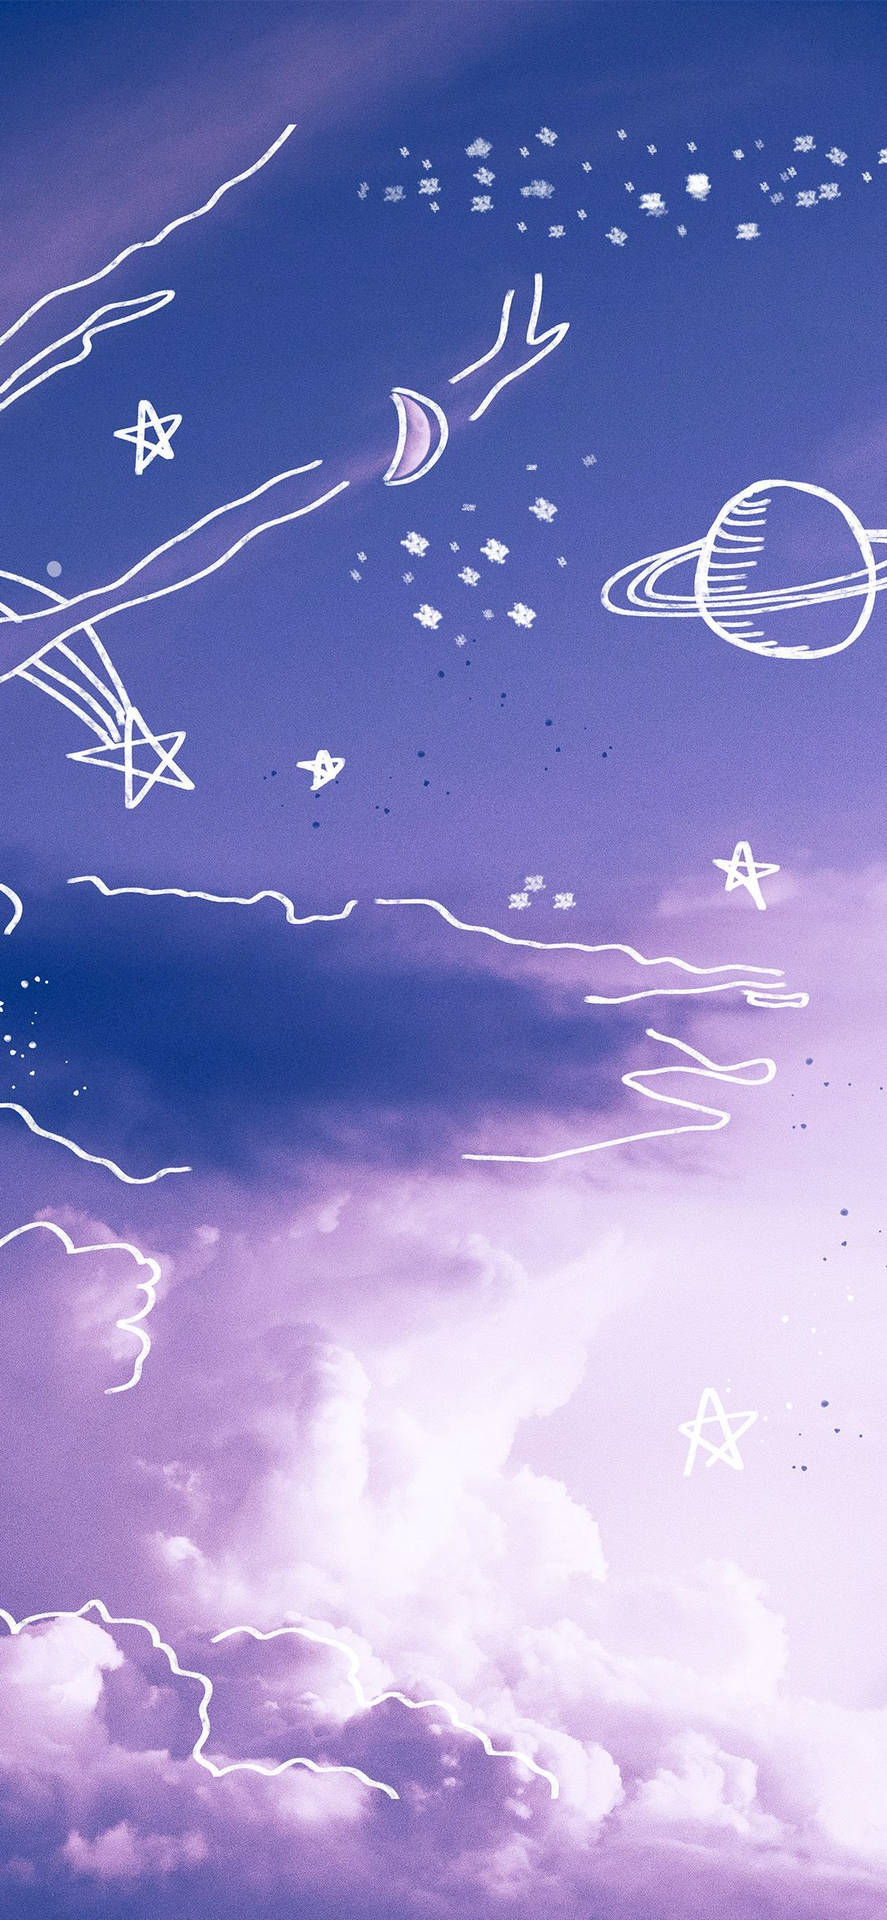 Download Cool Illustration Purple Aesthetic iPhone Display Wallpaper